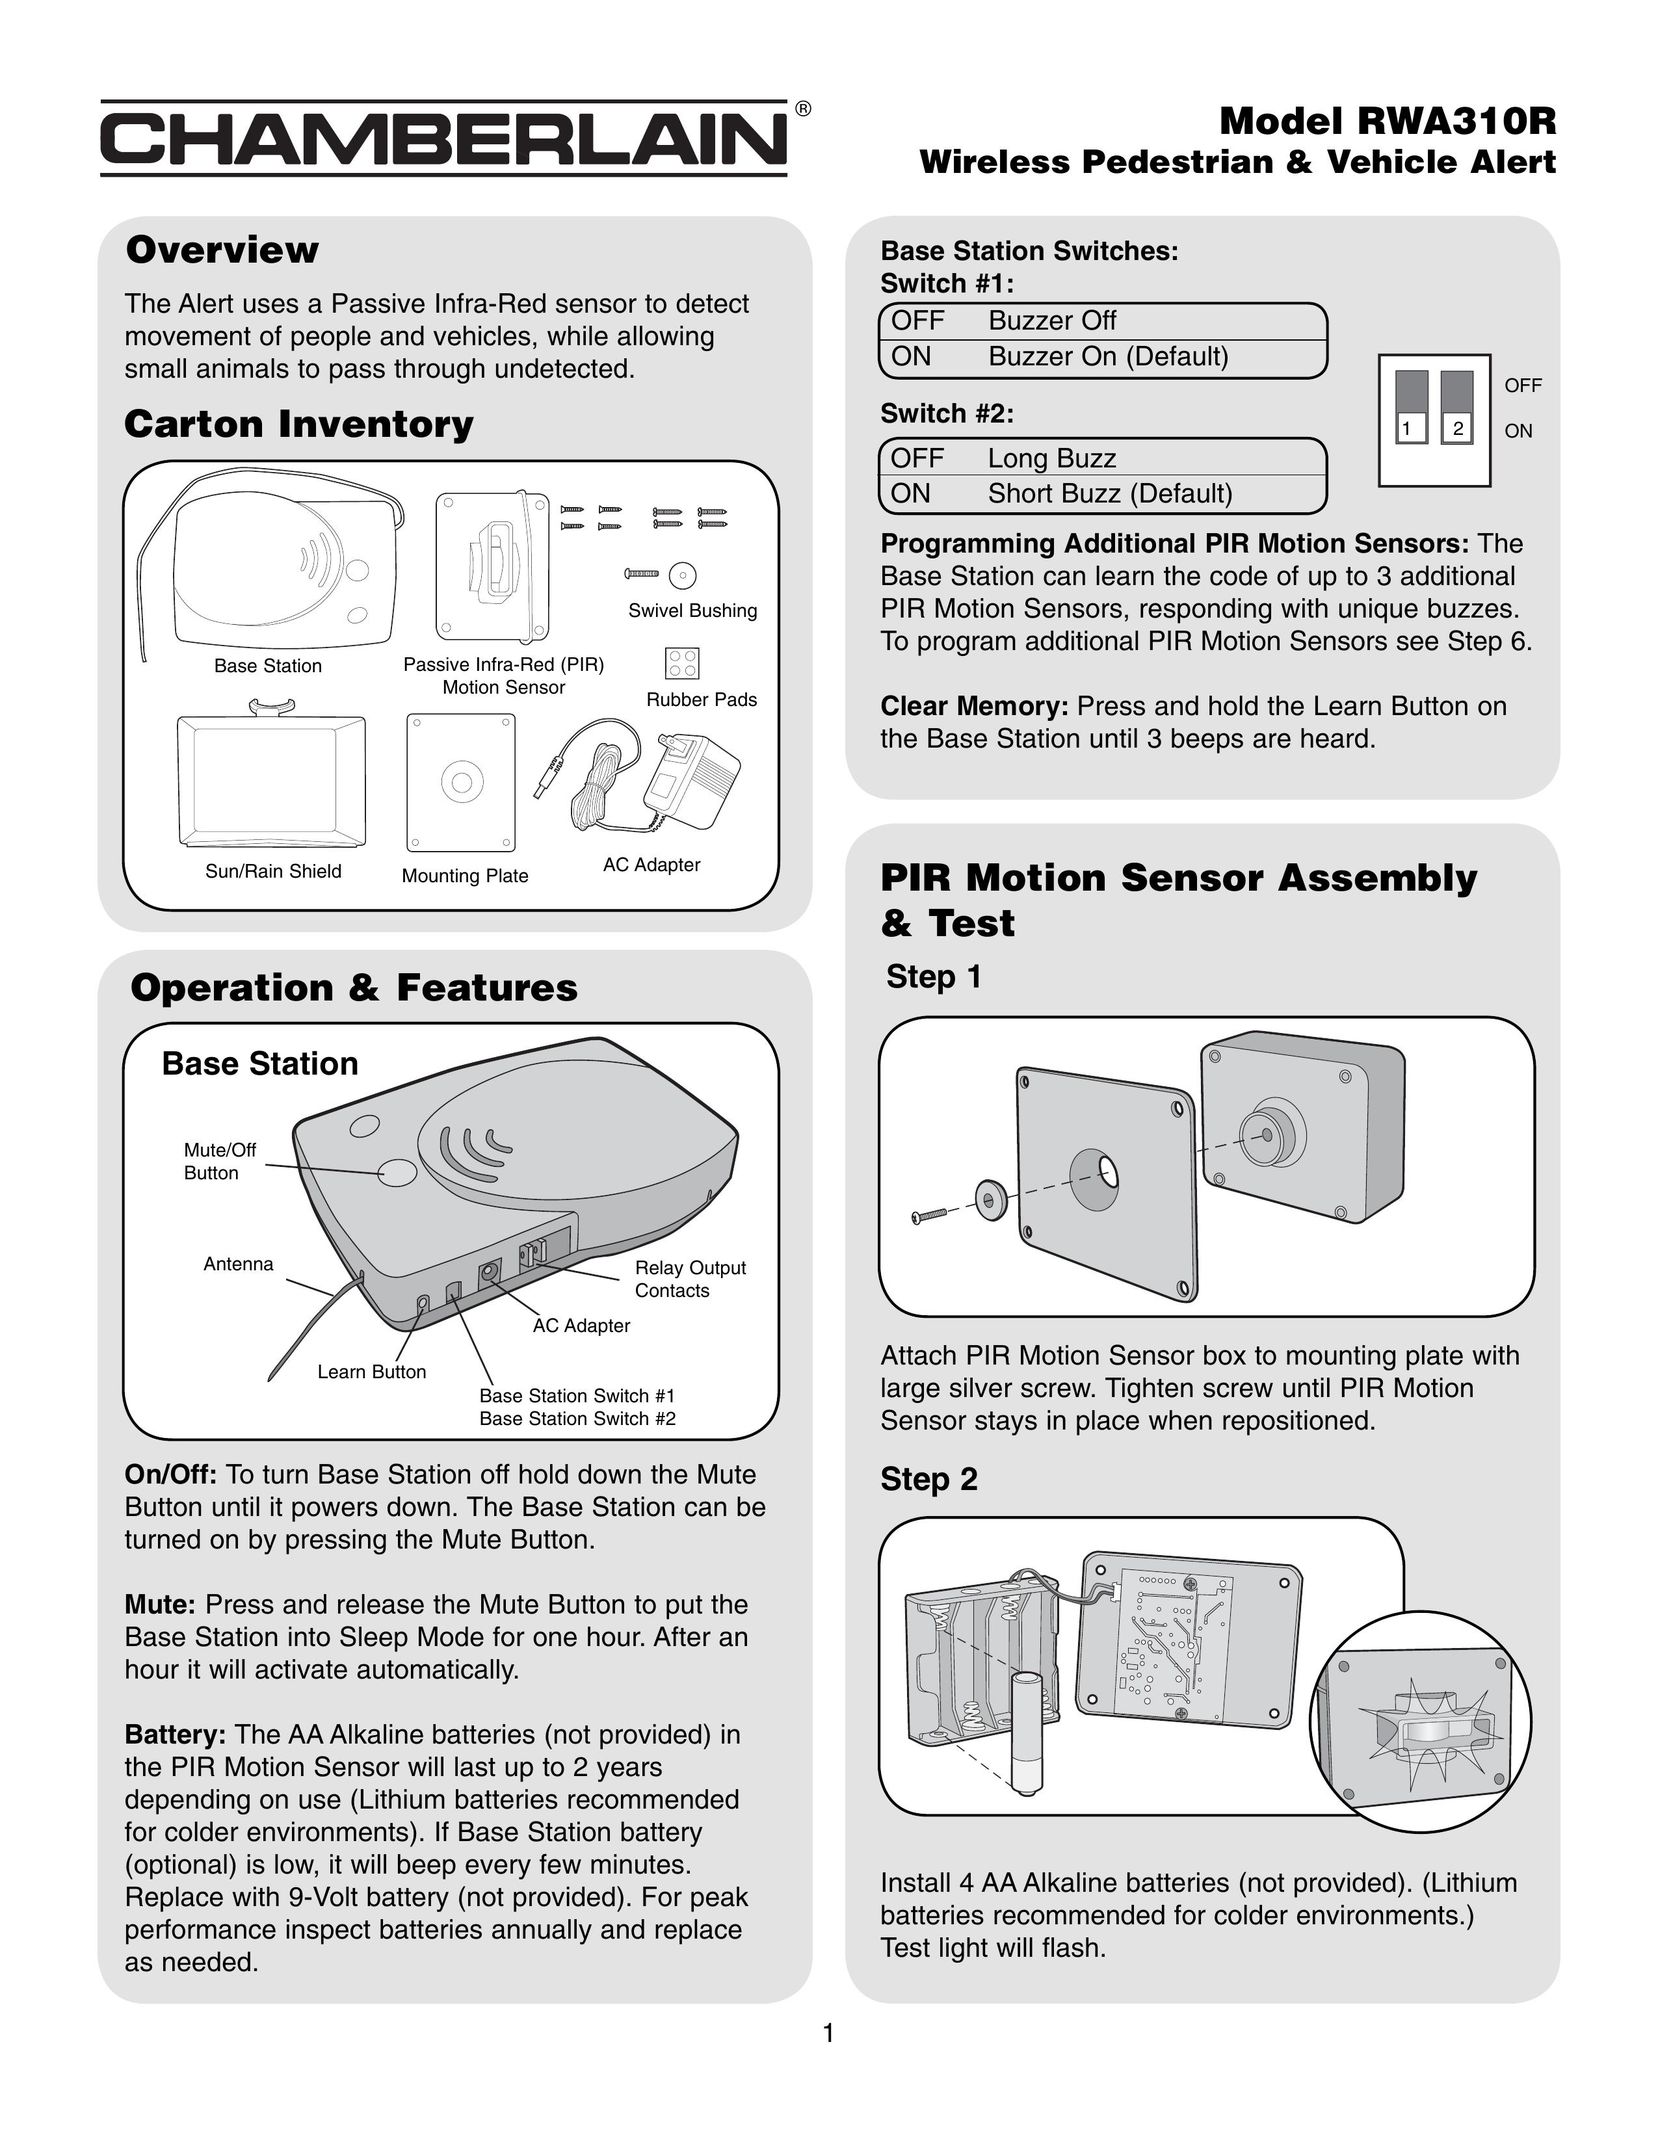 Chamberlain RWA310R Home Security System User Manual